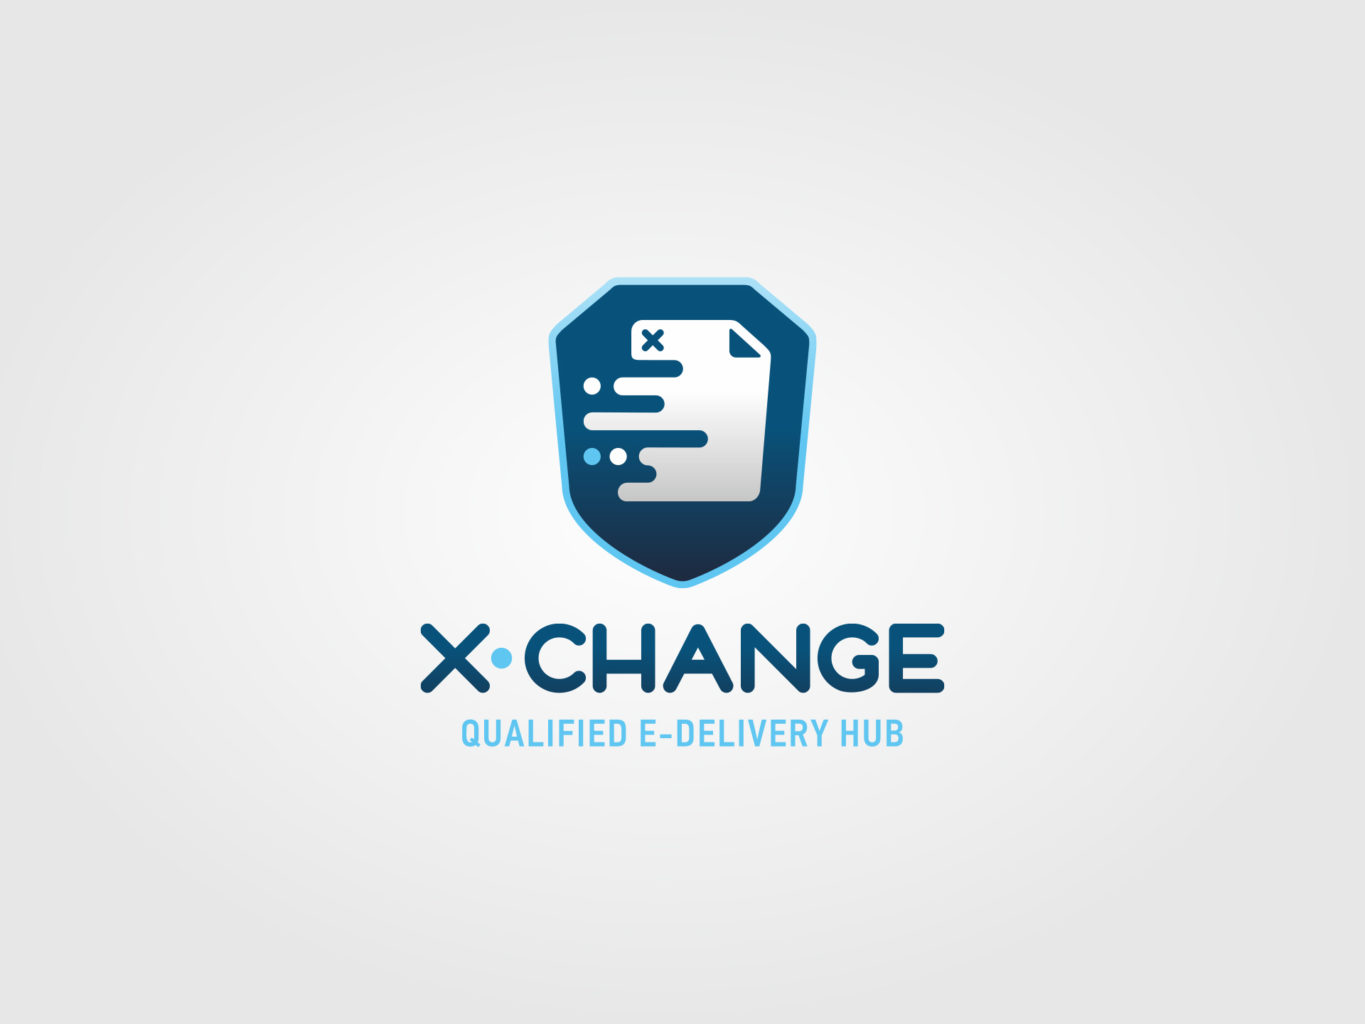 xchange qualified e delivery hub logo by fiftyeggz